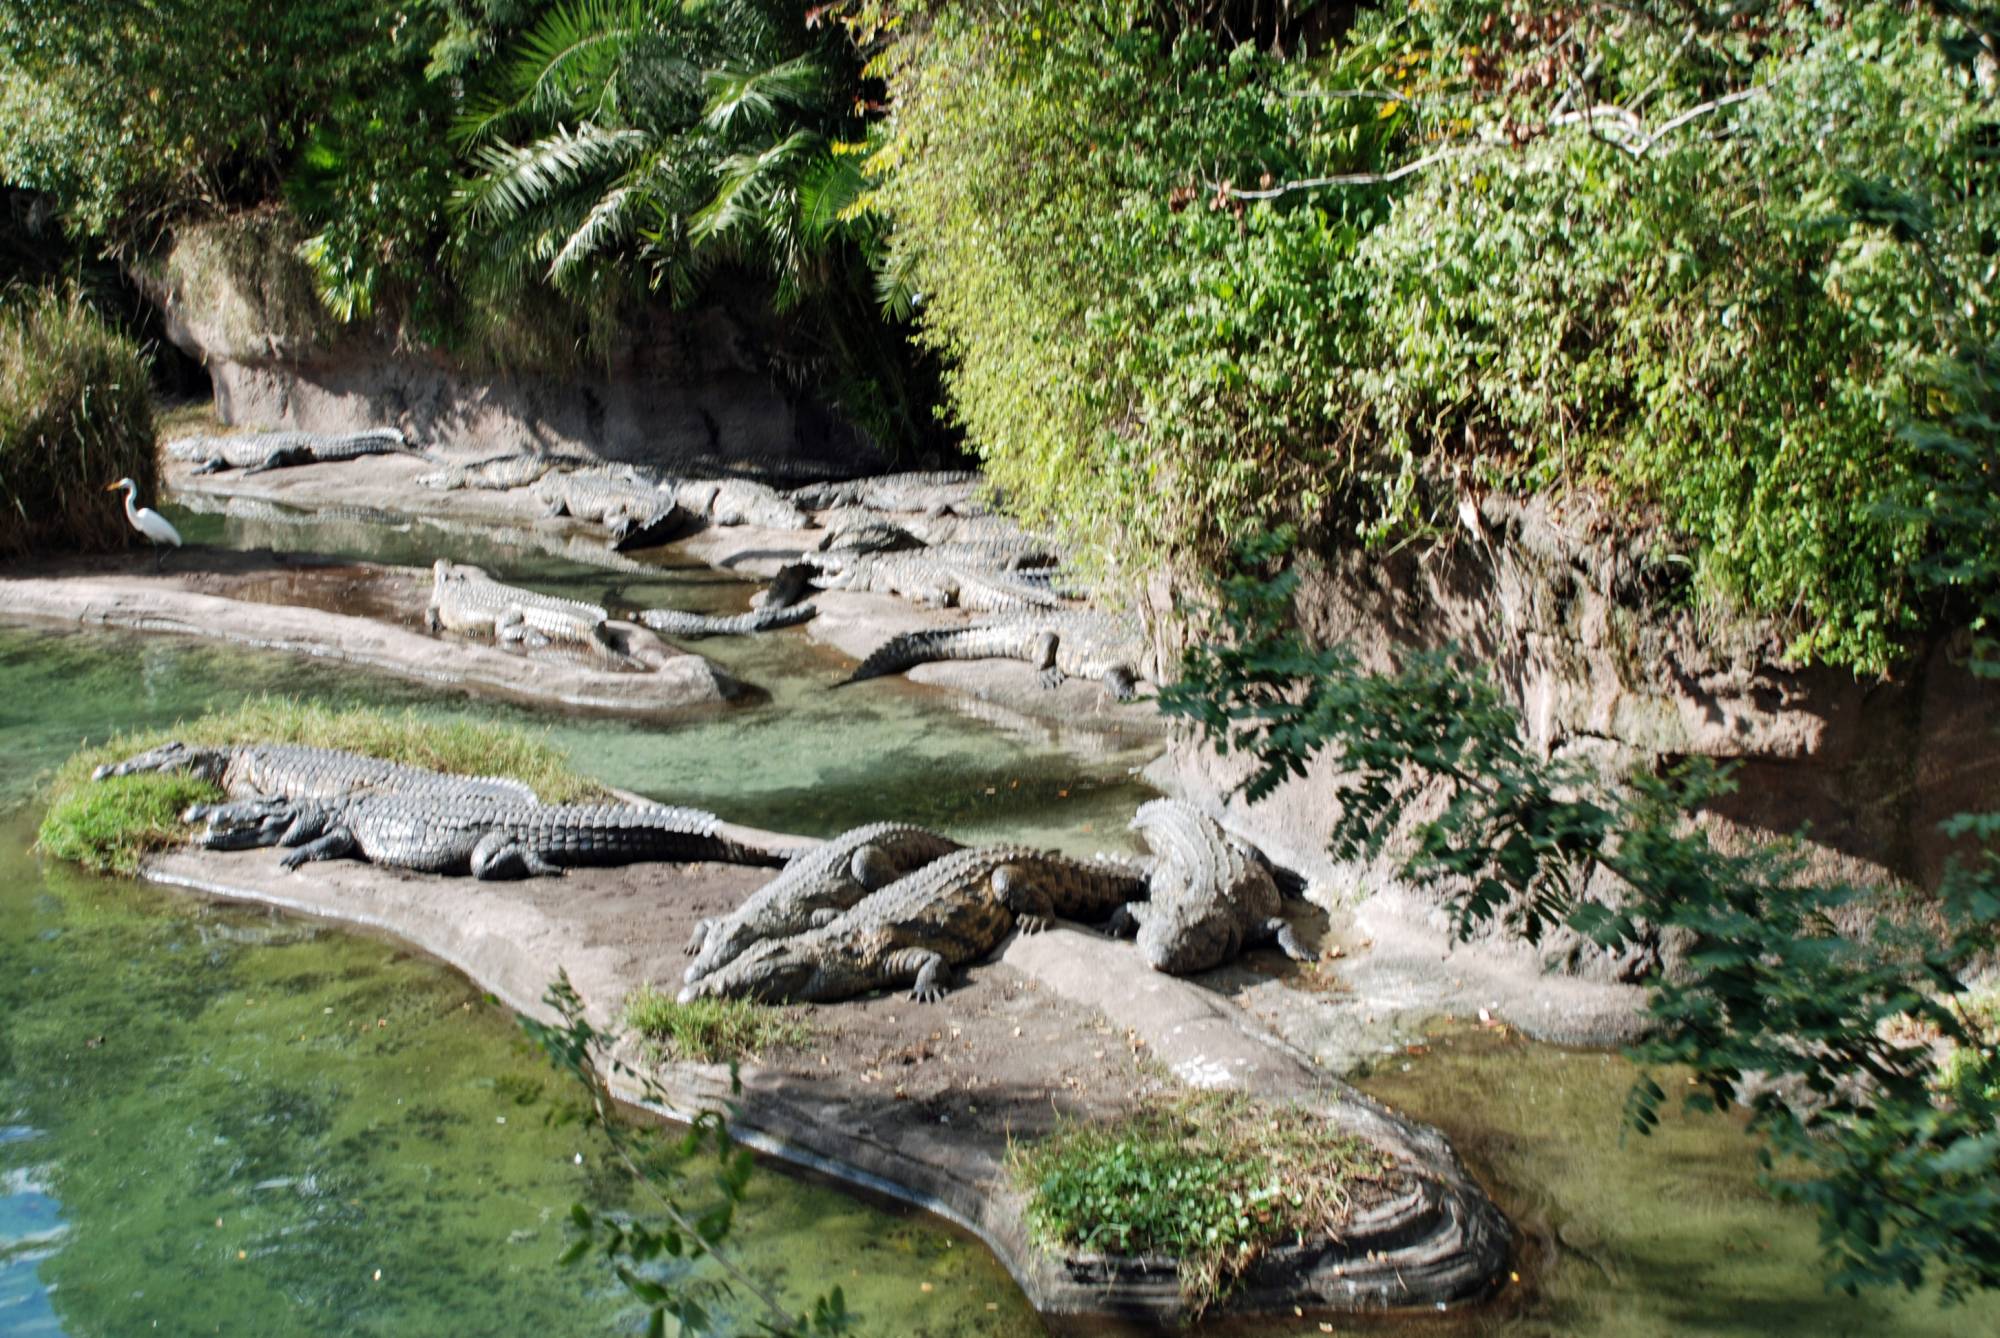 Animal Kingdom - Kilimanjaro Safaris Crocodiles